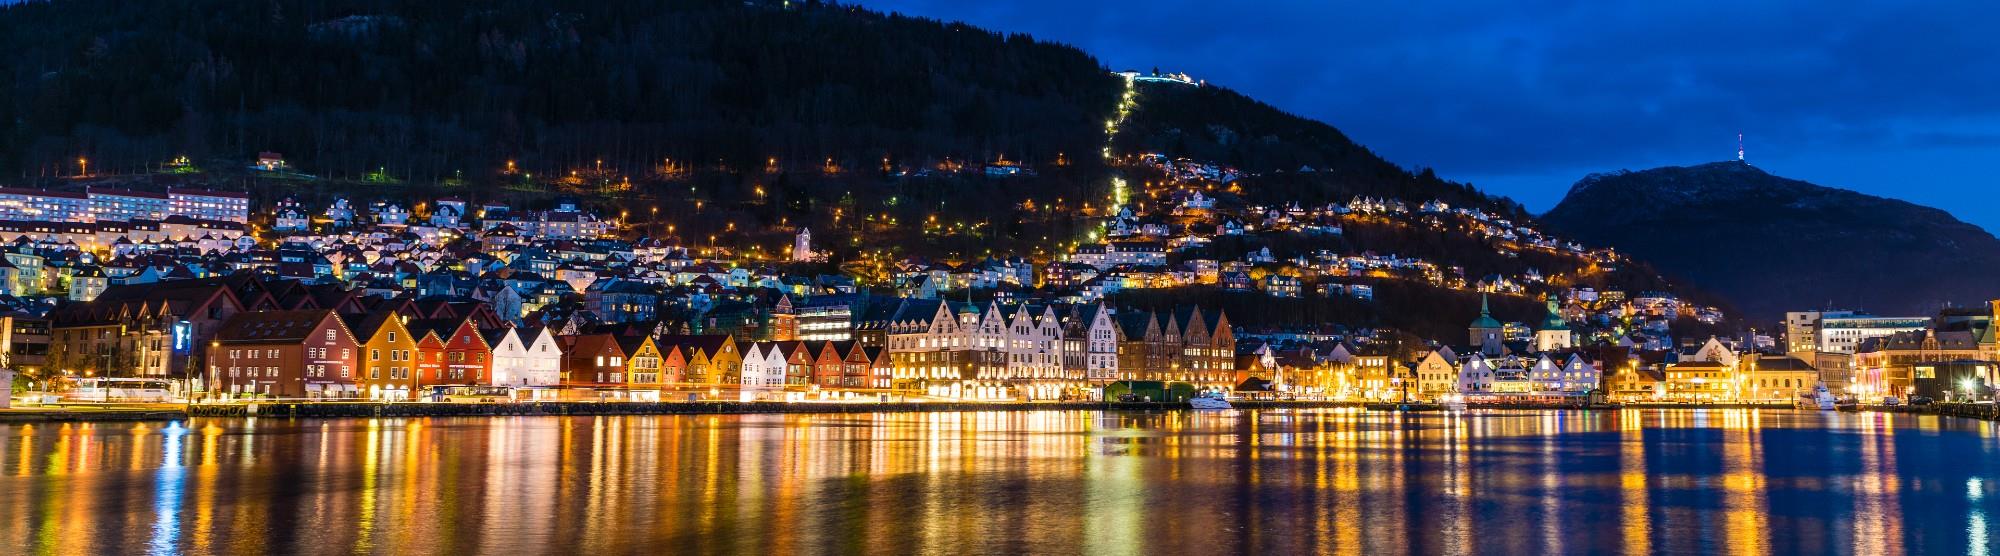 World Heritage City Bergen